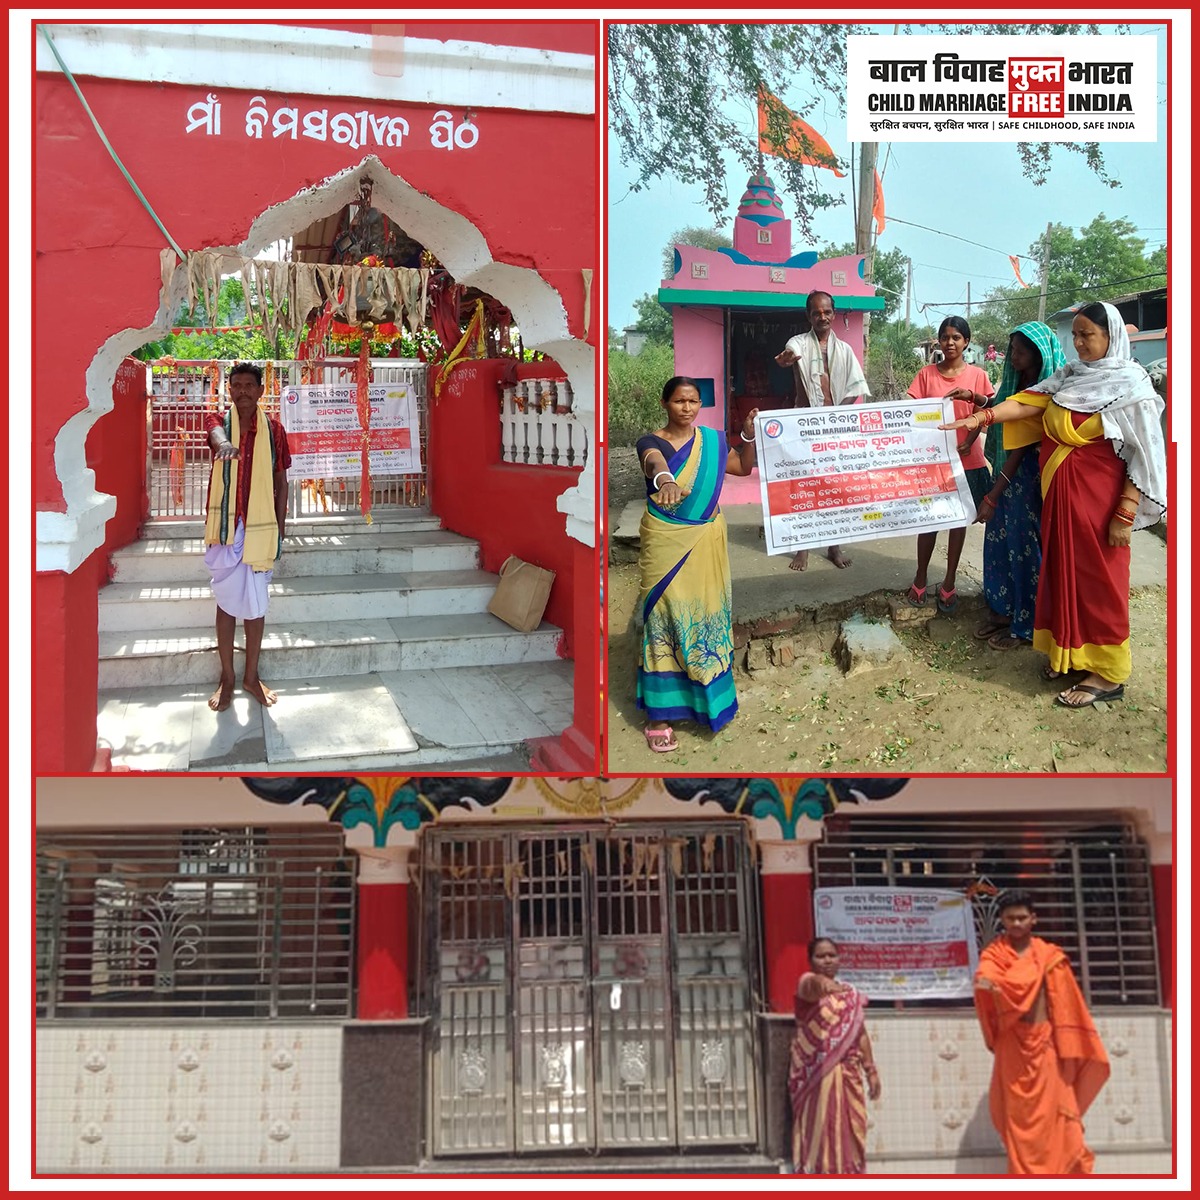 As part of ongoing Child Marriage Free India campaign, ADARSA as coalition partner glued posters on temples in Sambalpur Odisha. #ChildMarriageFreeIndia #AkshayaTritiya #Balvivahseazadi #cmfi @CMO_Odisha @Naveen_Odisha